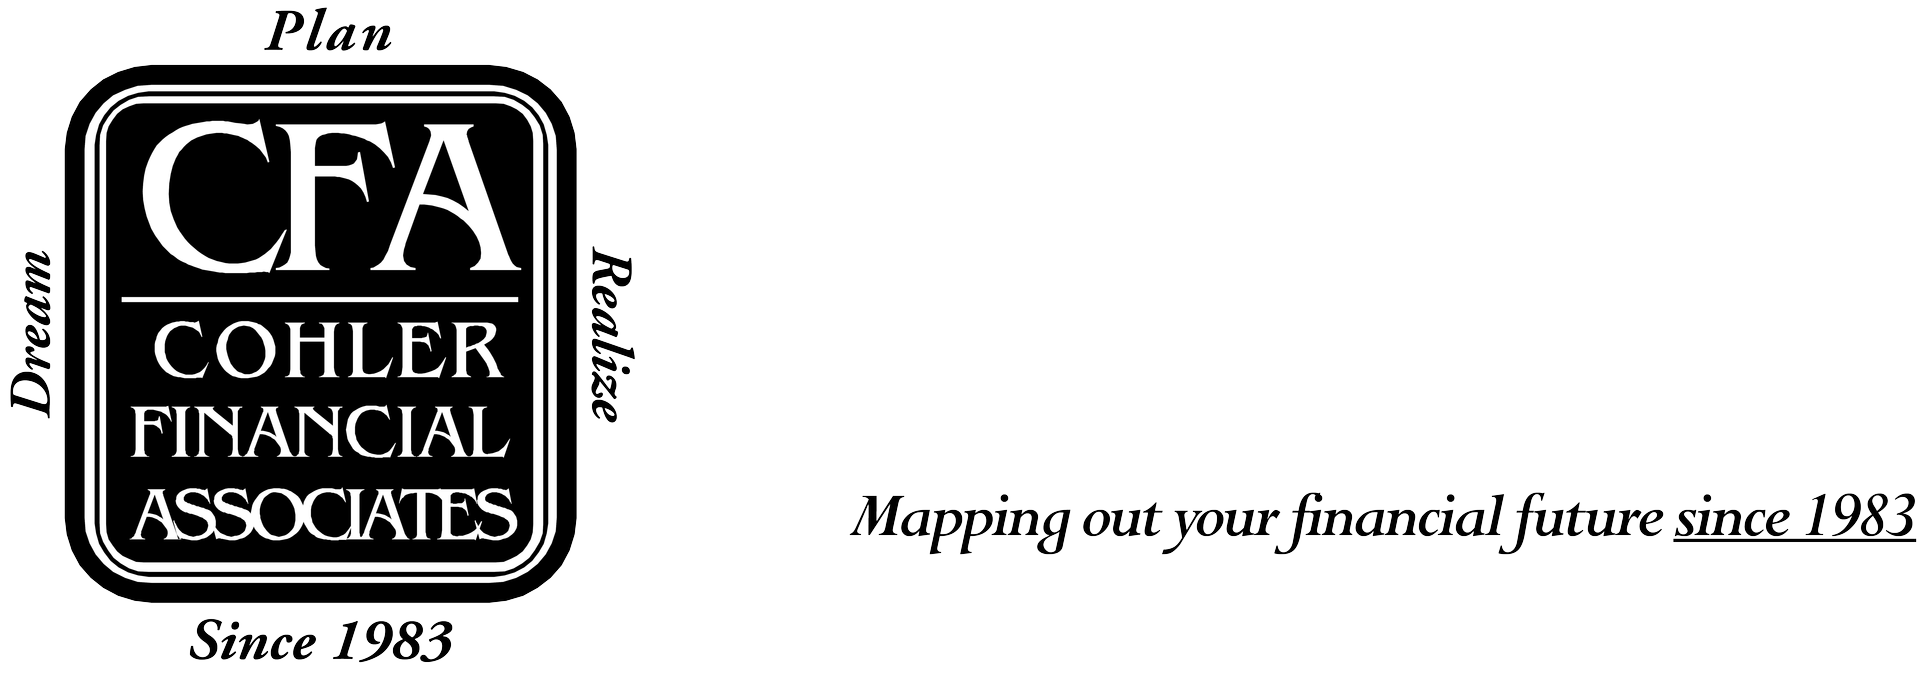 Cohler Financial Associates